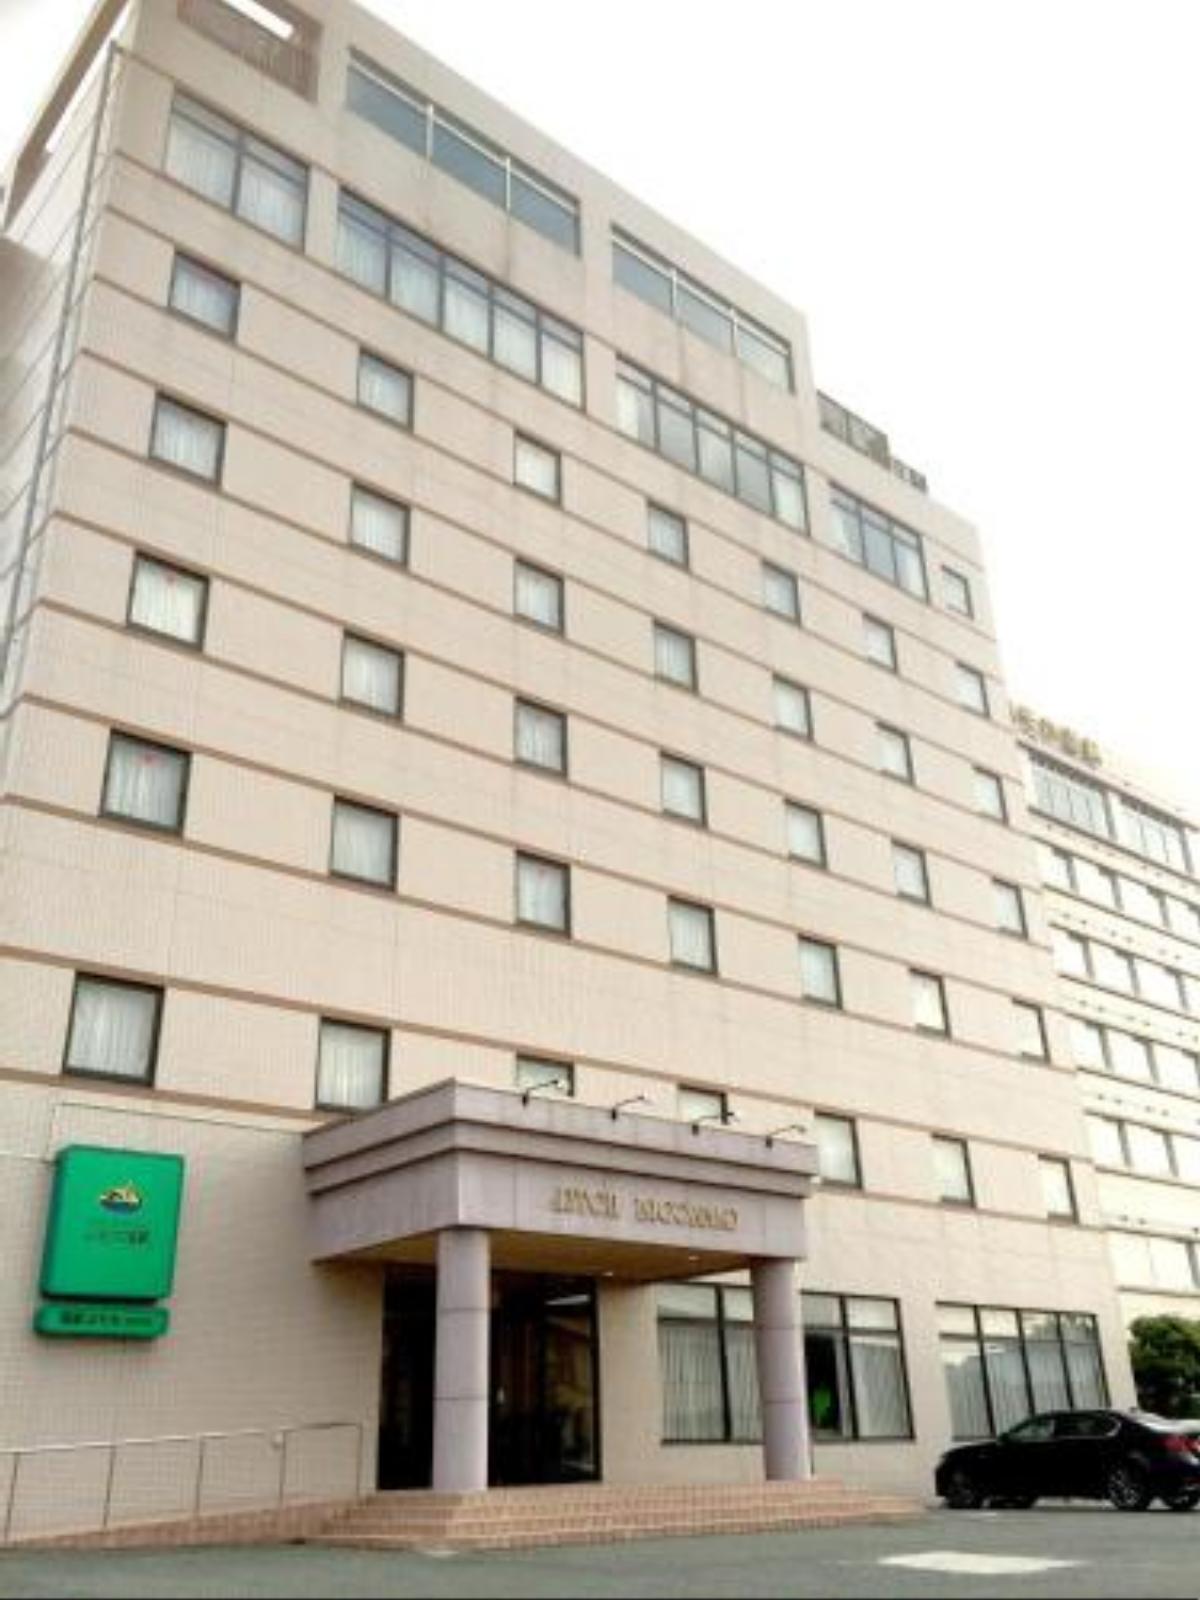 Gamagori Hotel Hotel Gamagori Japan